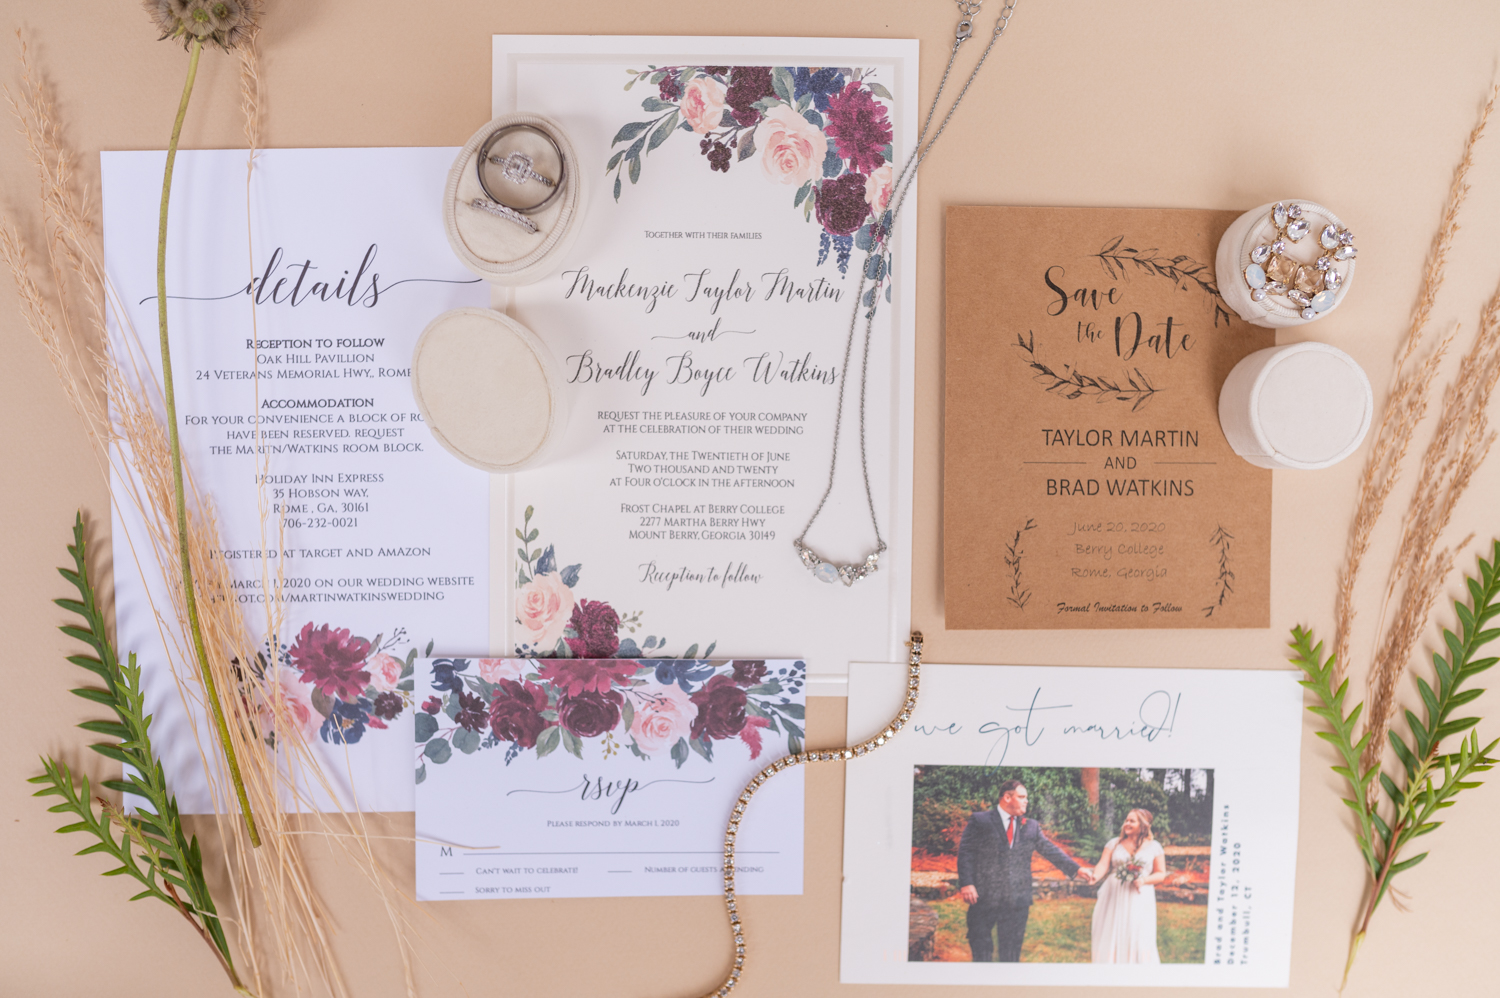 wedding invitation layout